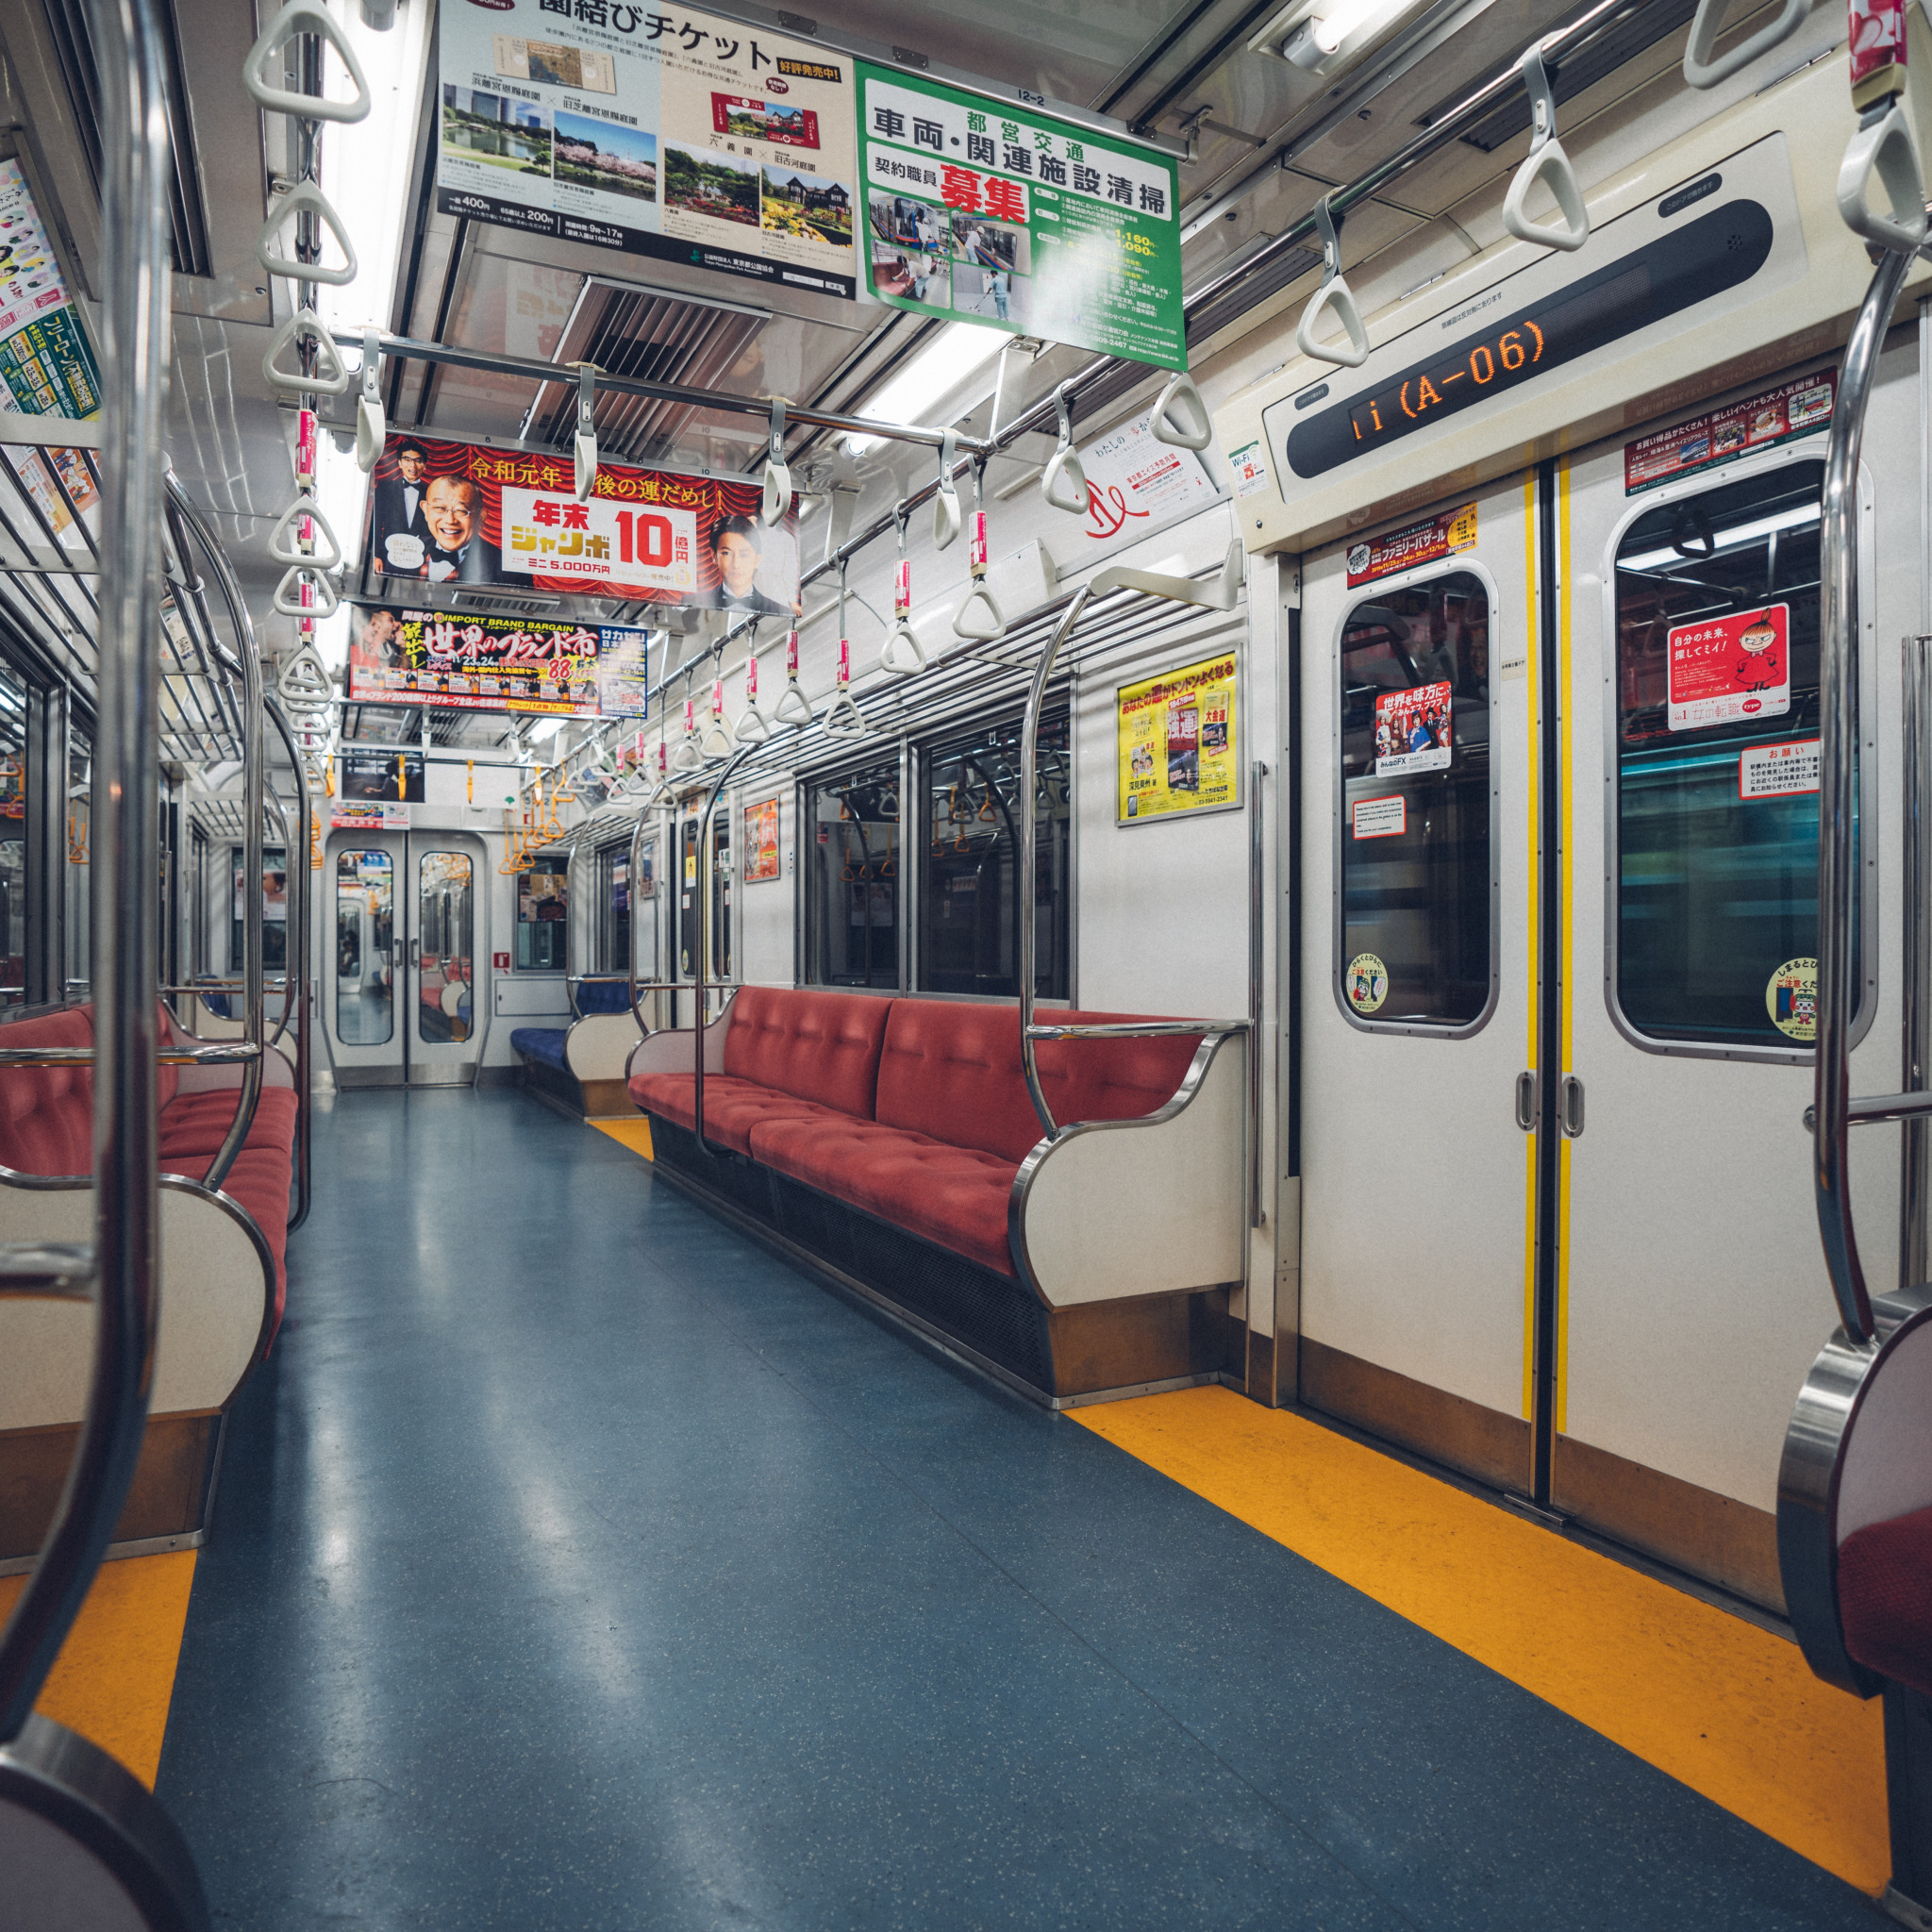 Net tokyo. Вагон метро Токио. Поезд метро Токио. Станции метро Токио. Метрополитен Токио вагоны.